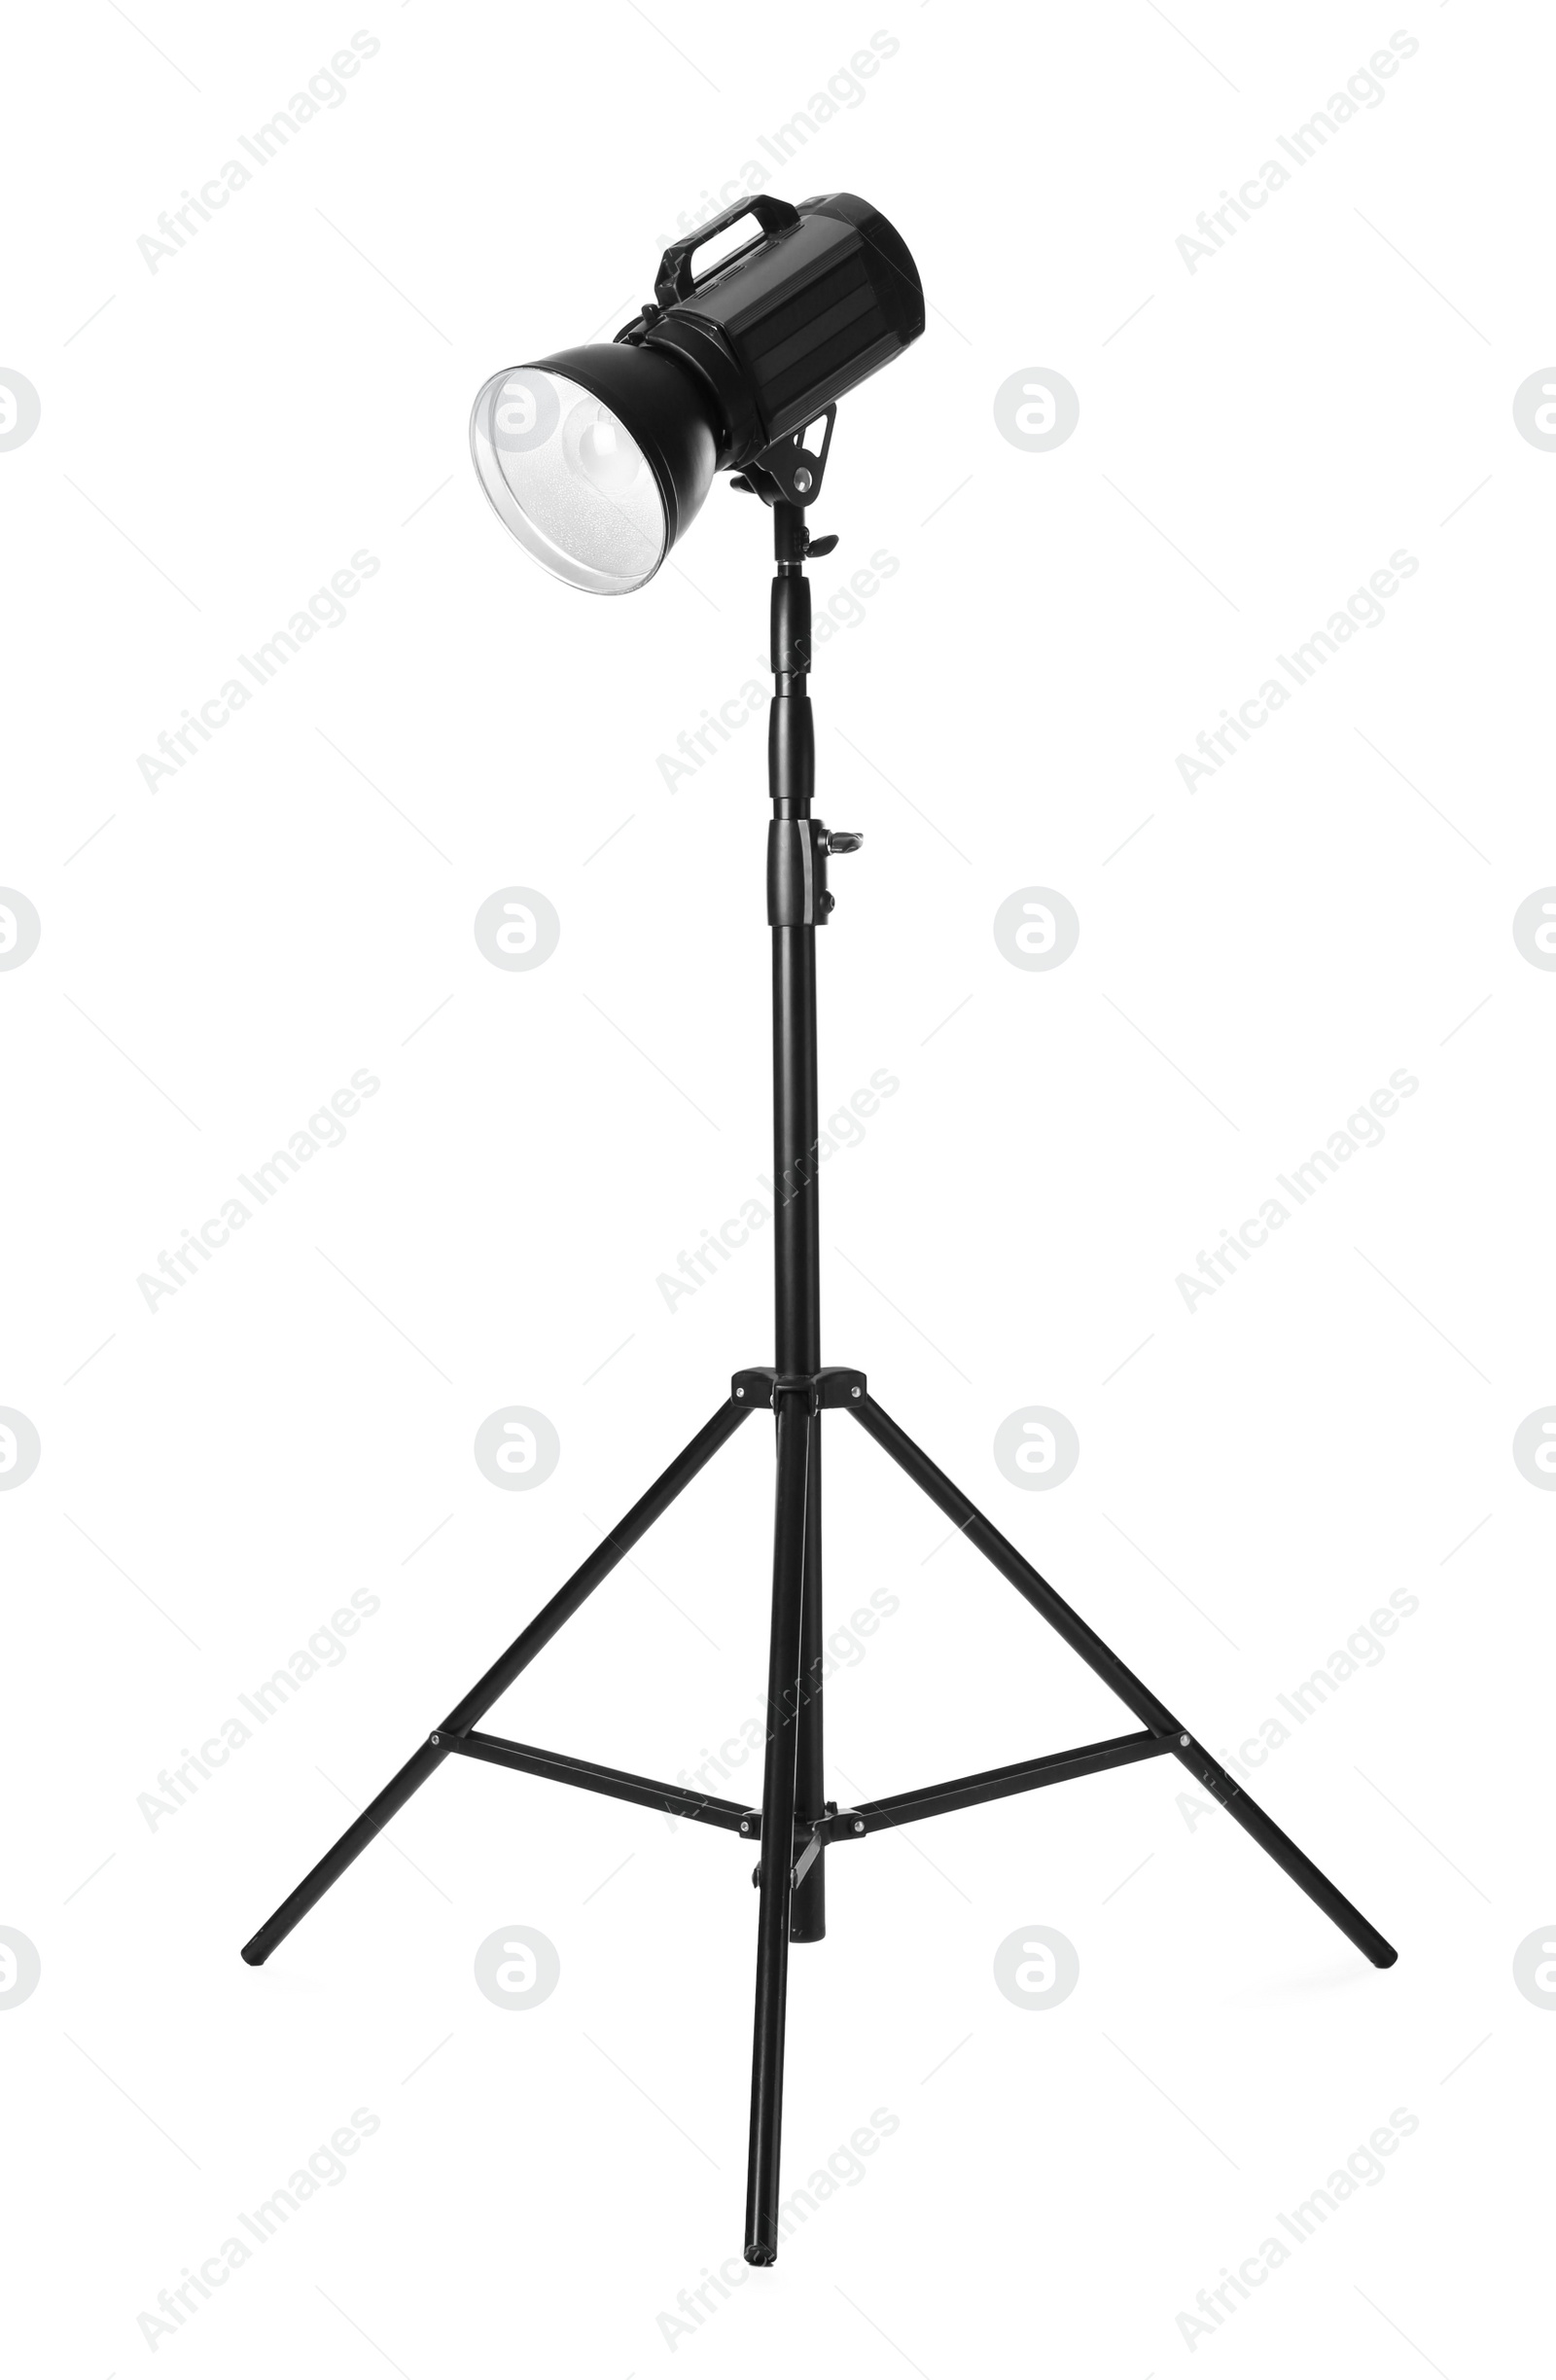 Photo of Studio flash light on tripod against white background. Professional photographer's equipment